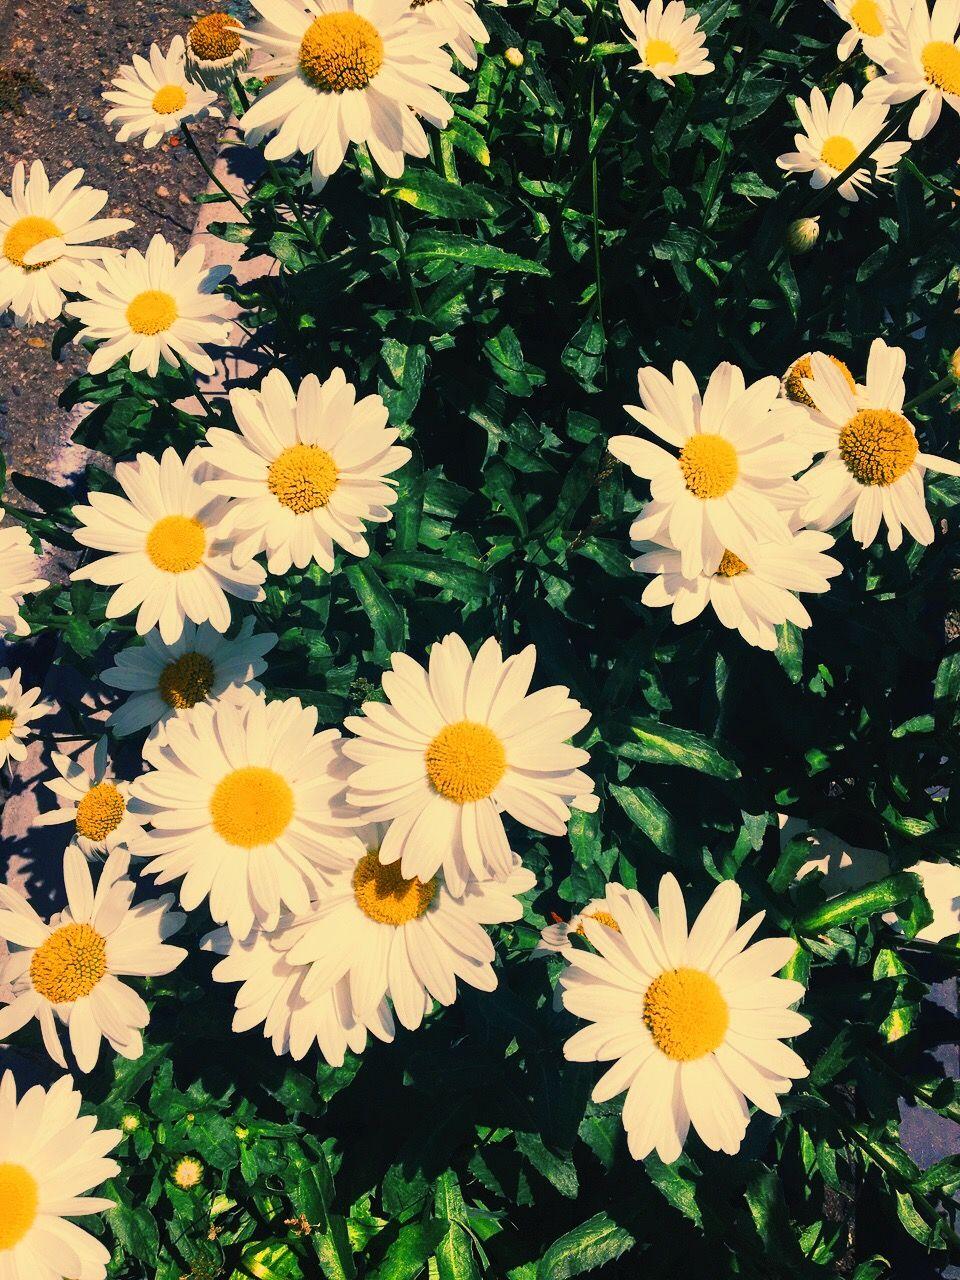 Cute daisy wallpaper. iPhone background. Daisy wallpaper